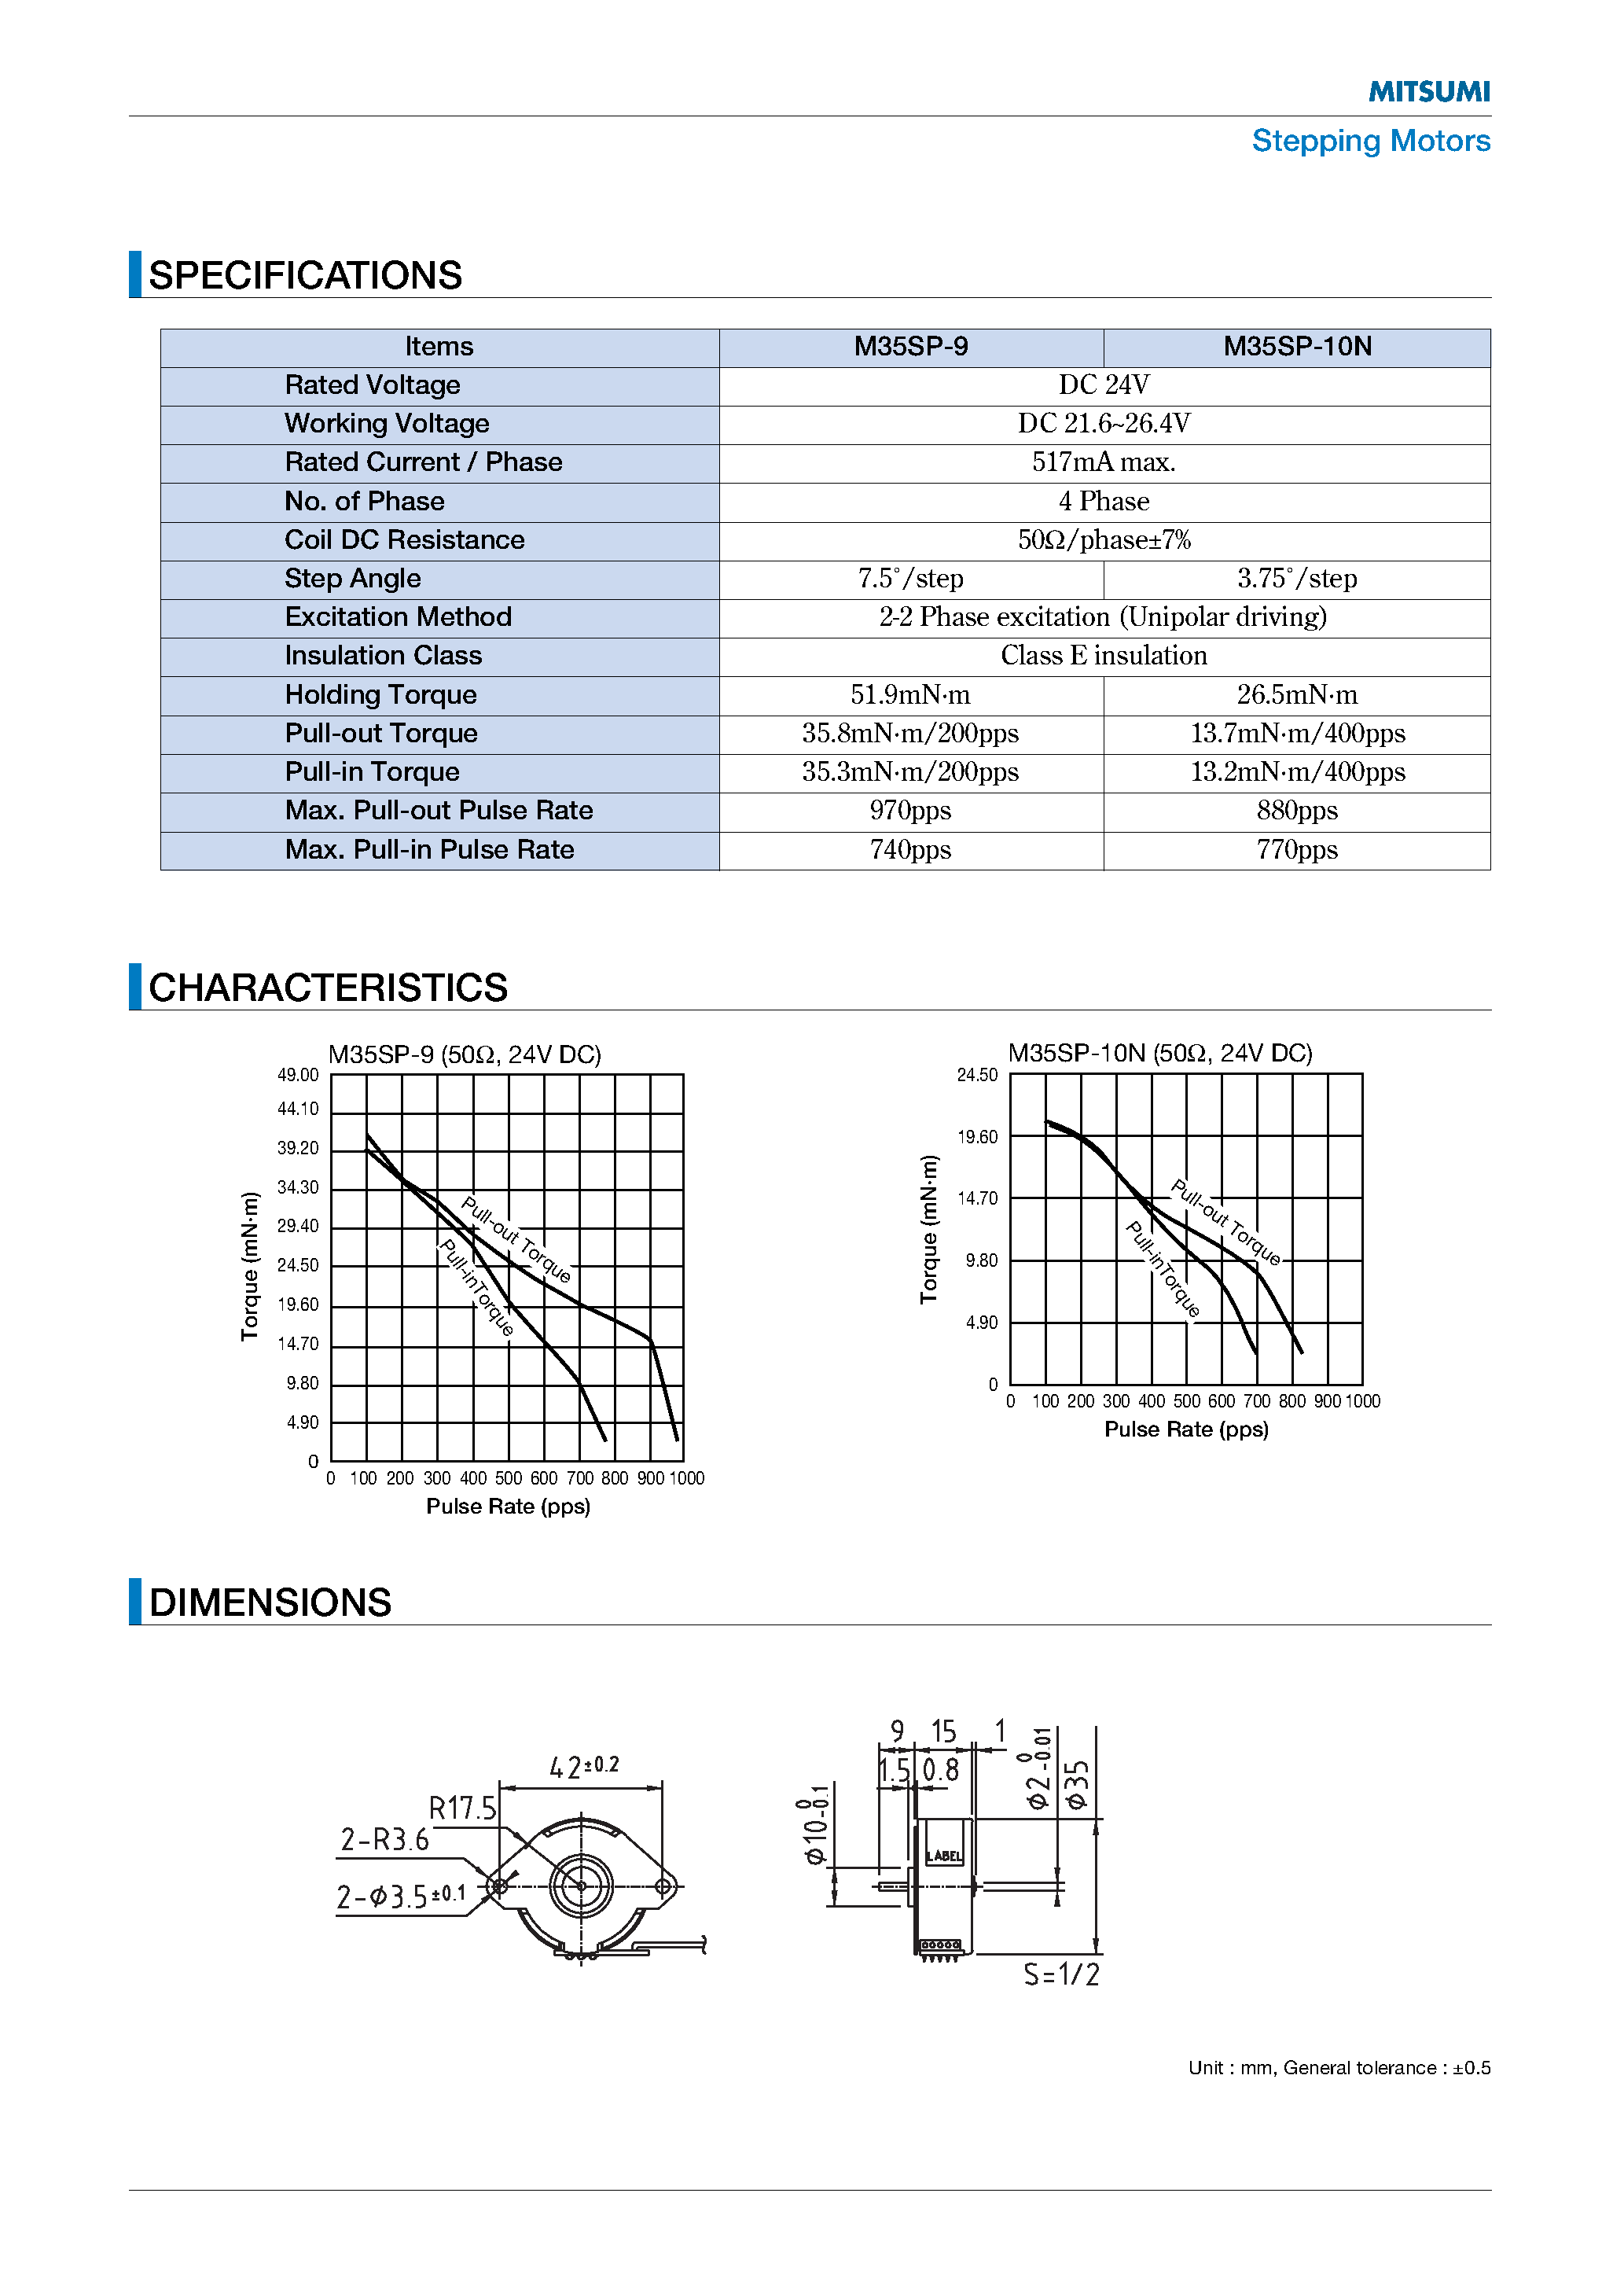 Datasheet M35SP-10 - (M35SP-9/-10) Stepping Motors page 2